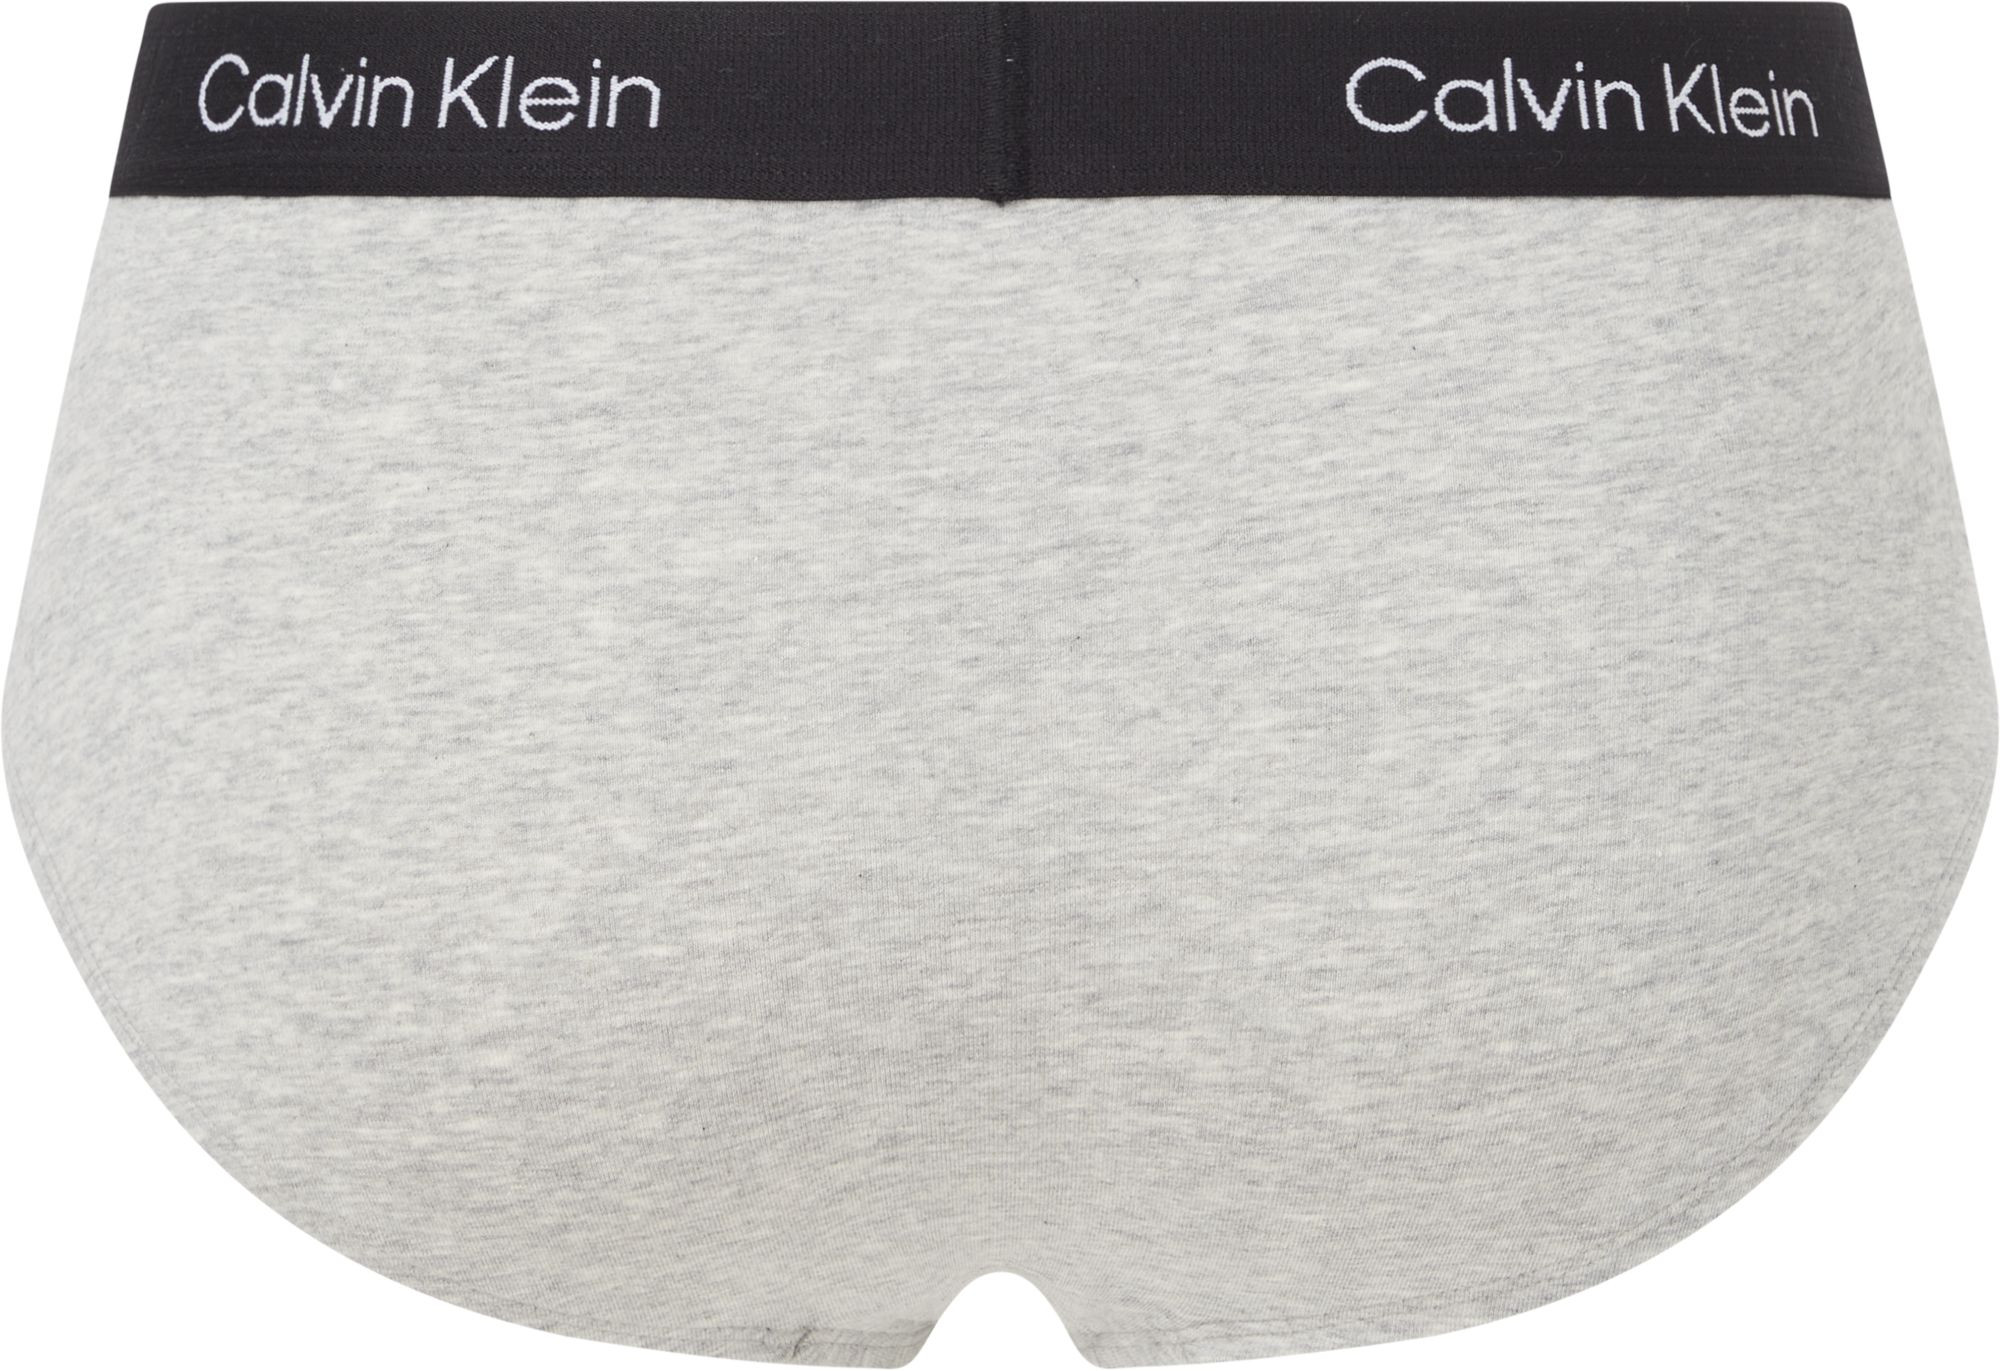 Pánské slipy 3 Pack Briefs CK96 000NB3527A6H3 černá/bílá/šedá - Calvin Klein M